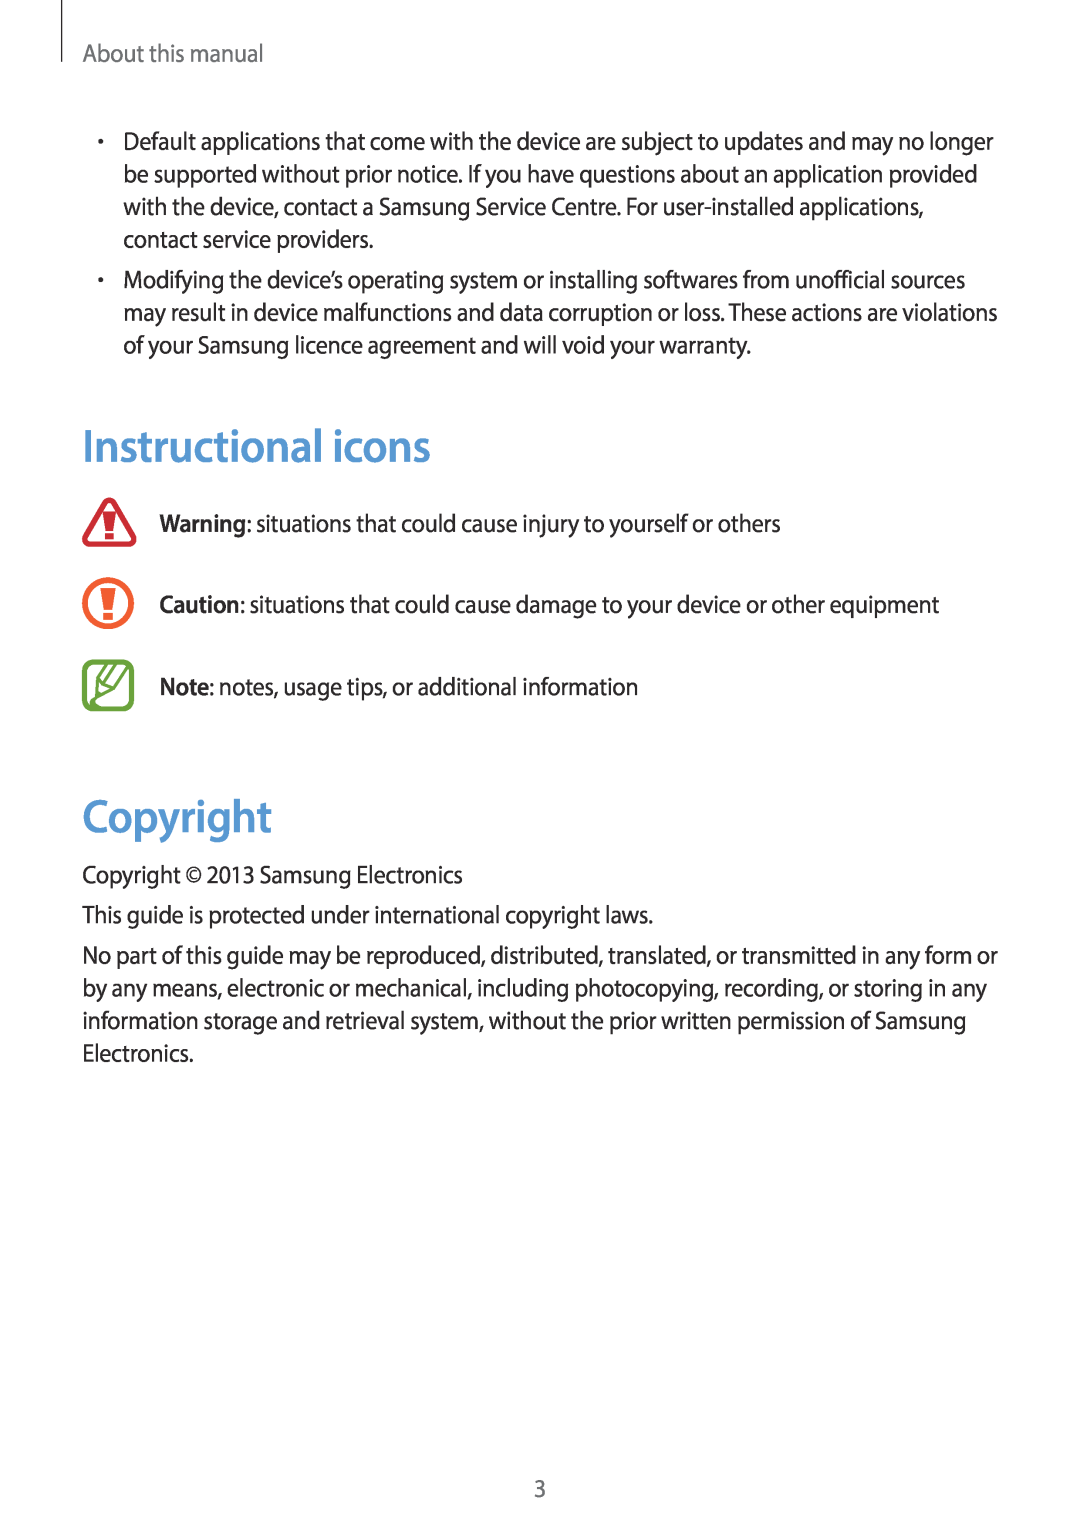 Samsung SM-G7105ZKADBT, SM-G7105ZKAATO, SM-G7105ZWAATO, SM-G7105ZKATUR Instructional icons, Copyright, About this manual 